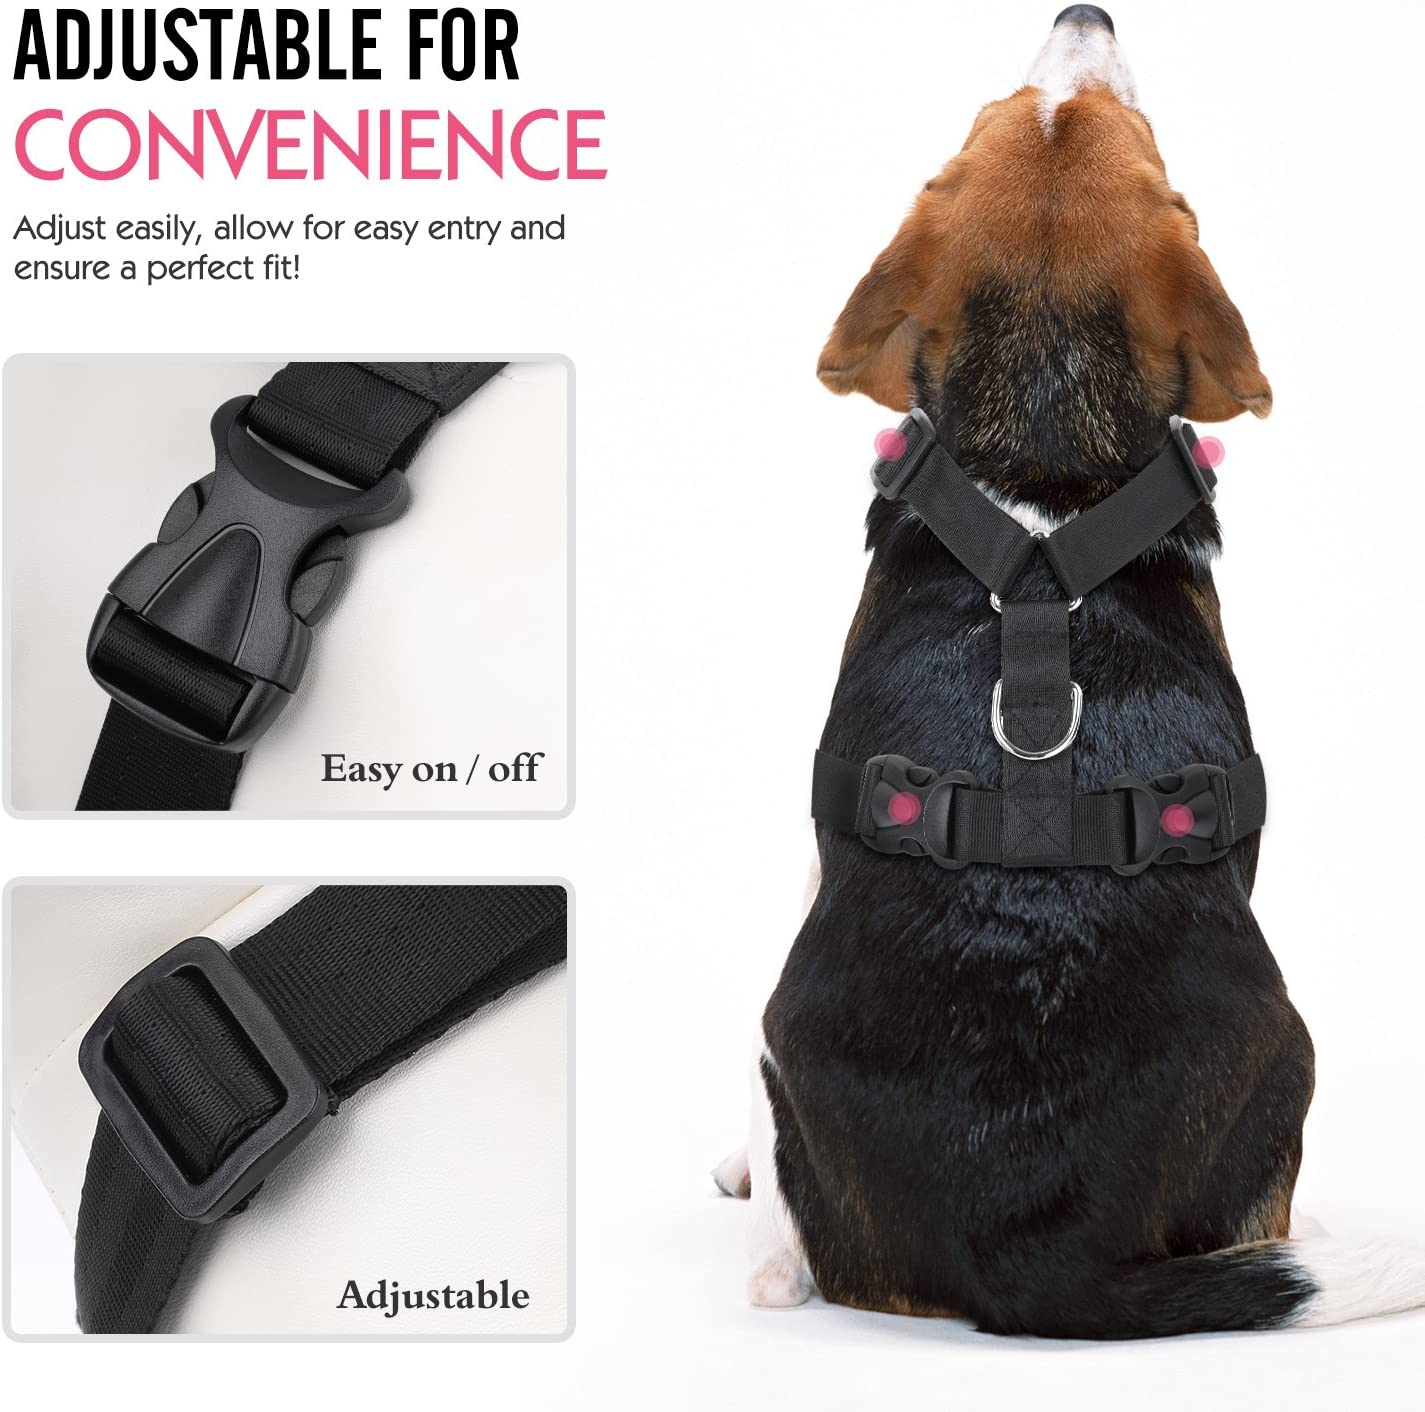  Pawaboo Cinturón de Arnés de Chaleco de Seguridad para Perros, Mascotas Arnés Ajustable para Perros de 33 lb-55 LB, Negro 